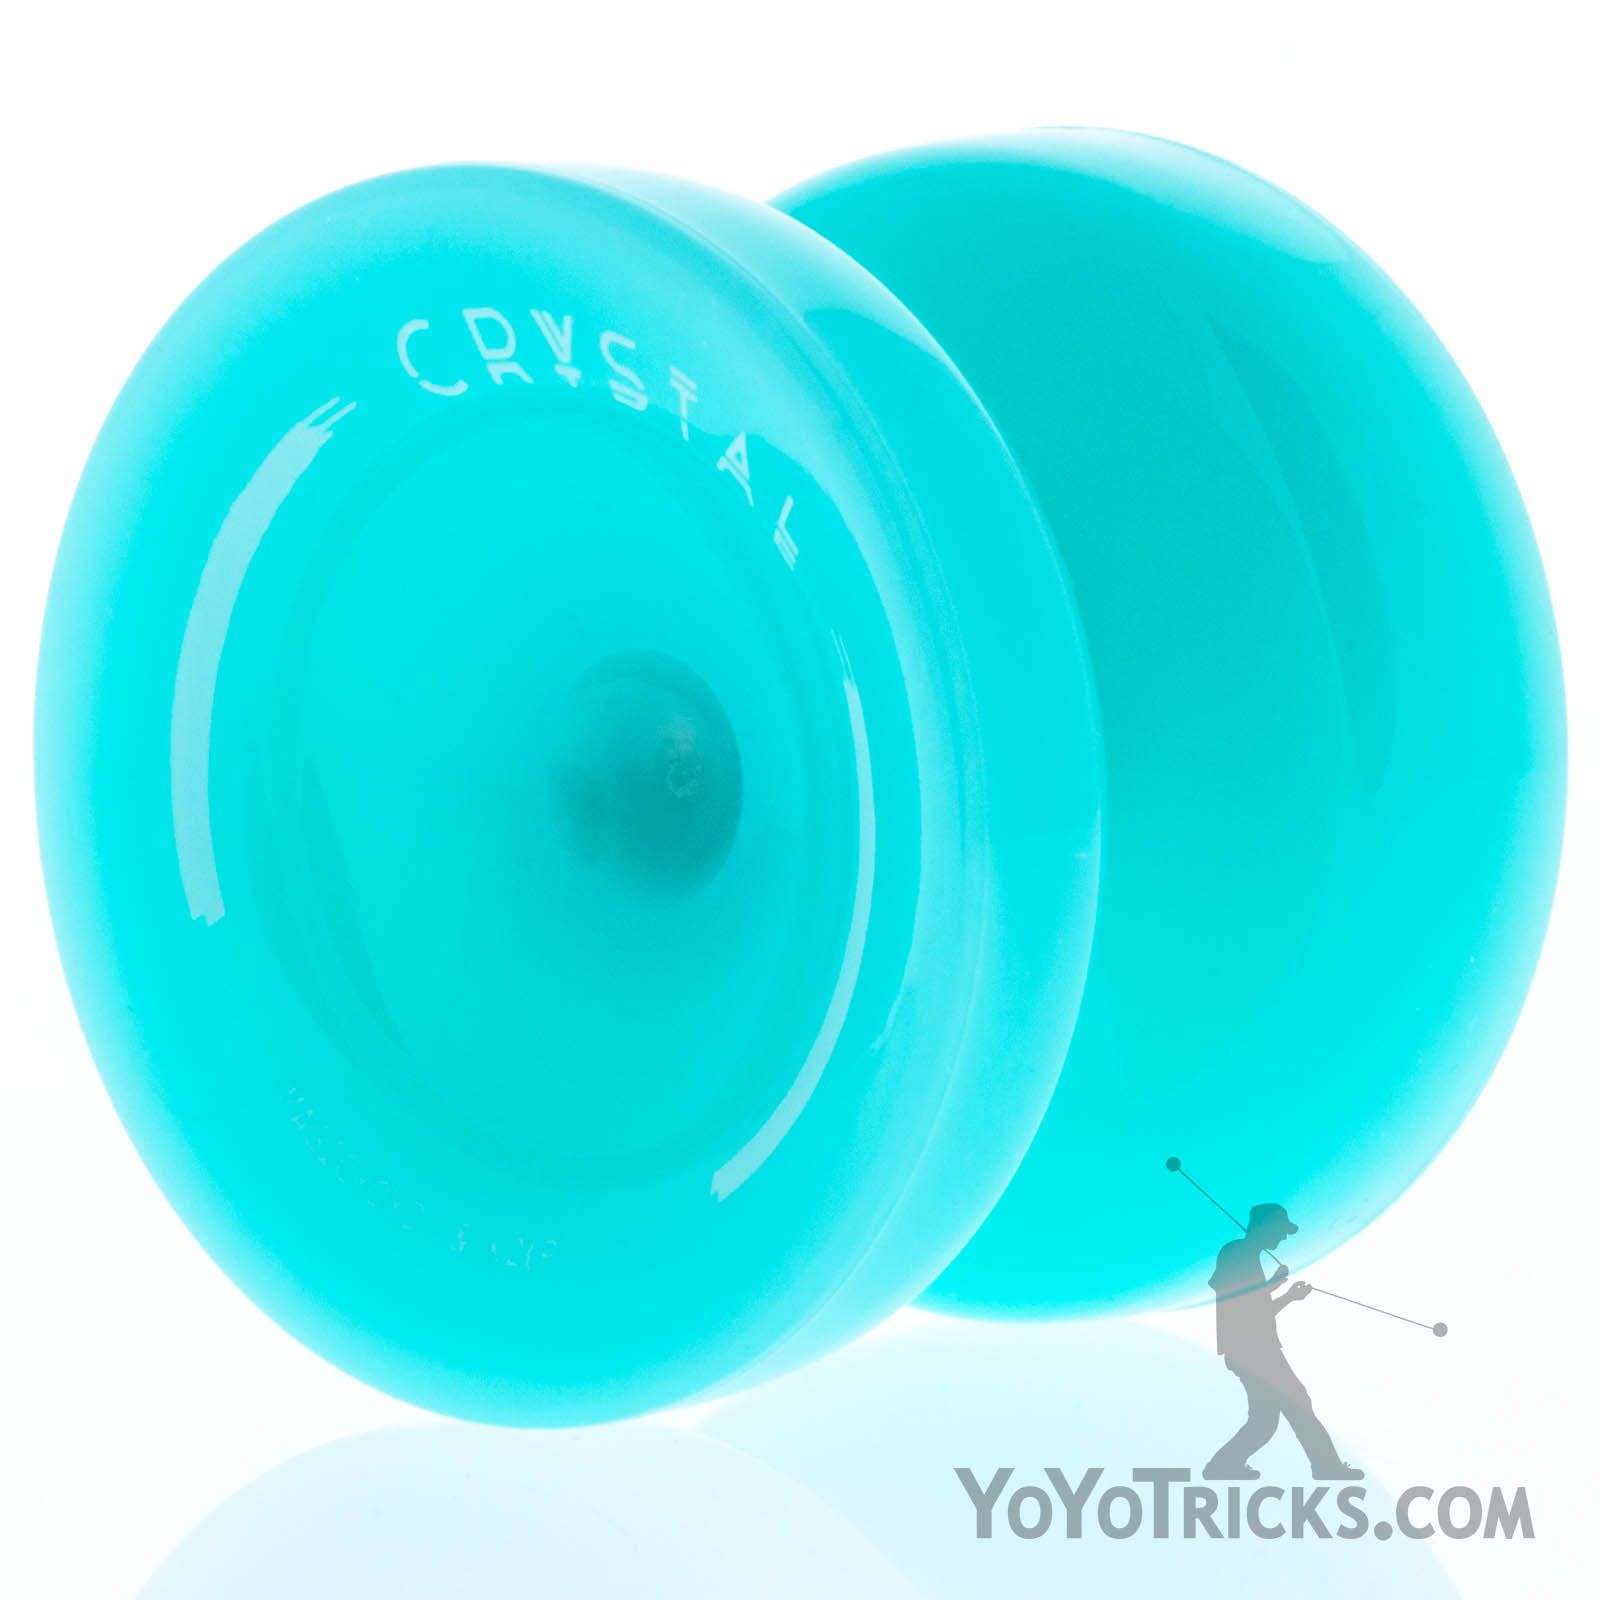 Crystal Cream Responsive Yo-yo for Beginner Dual Purpose Replacement Unresponsive Bearing for Intermediate Advanced,with 5 Yoyo Strings,Bag,Bearing Remover MAGICYOYO K2 PLUS CRYSTAL Yoyo for Kids 